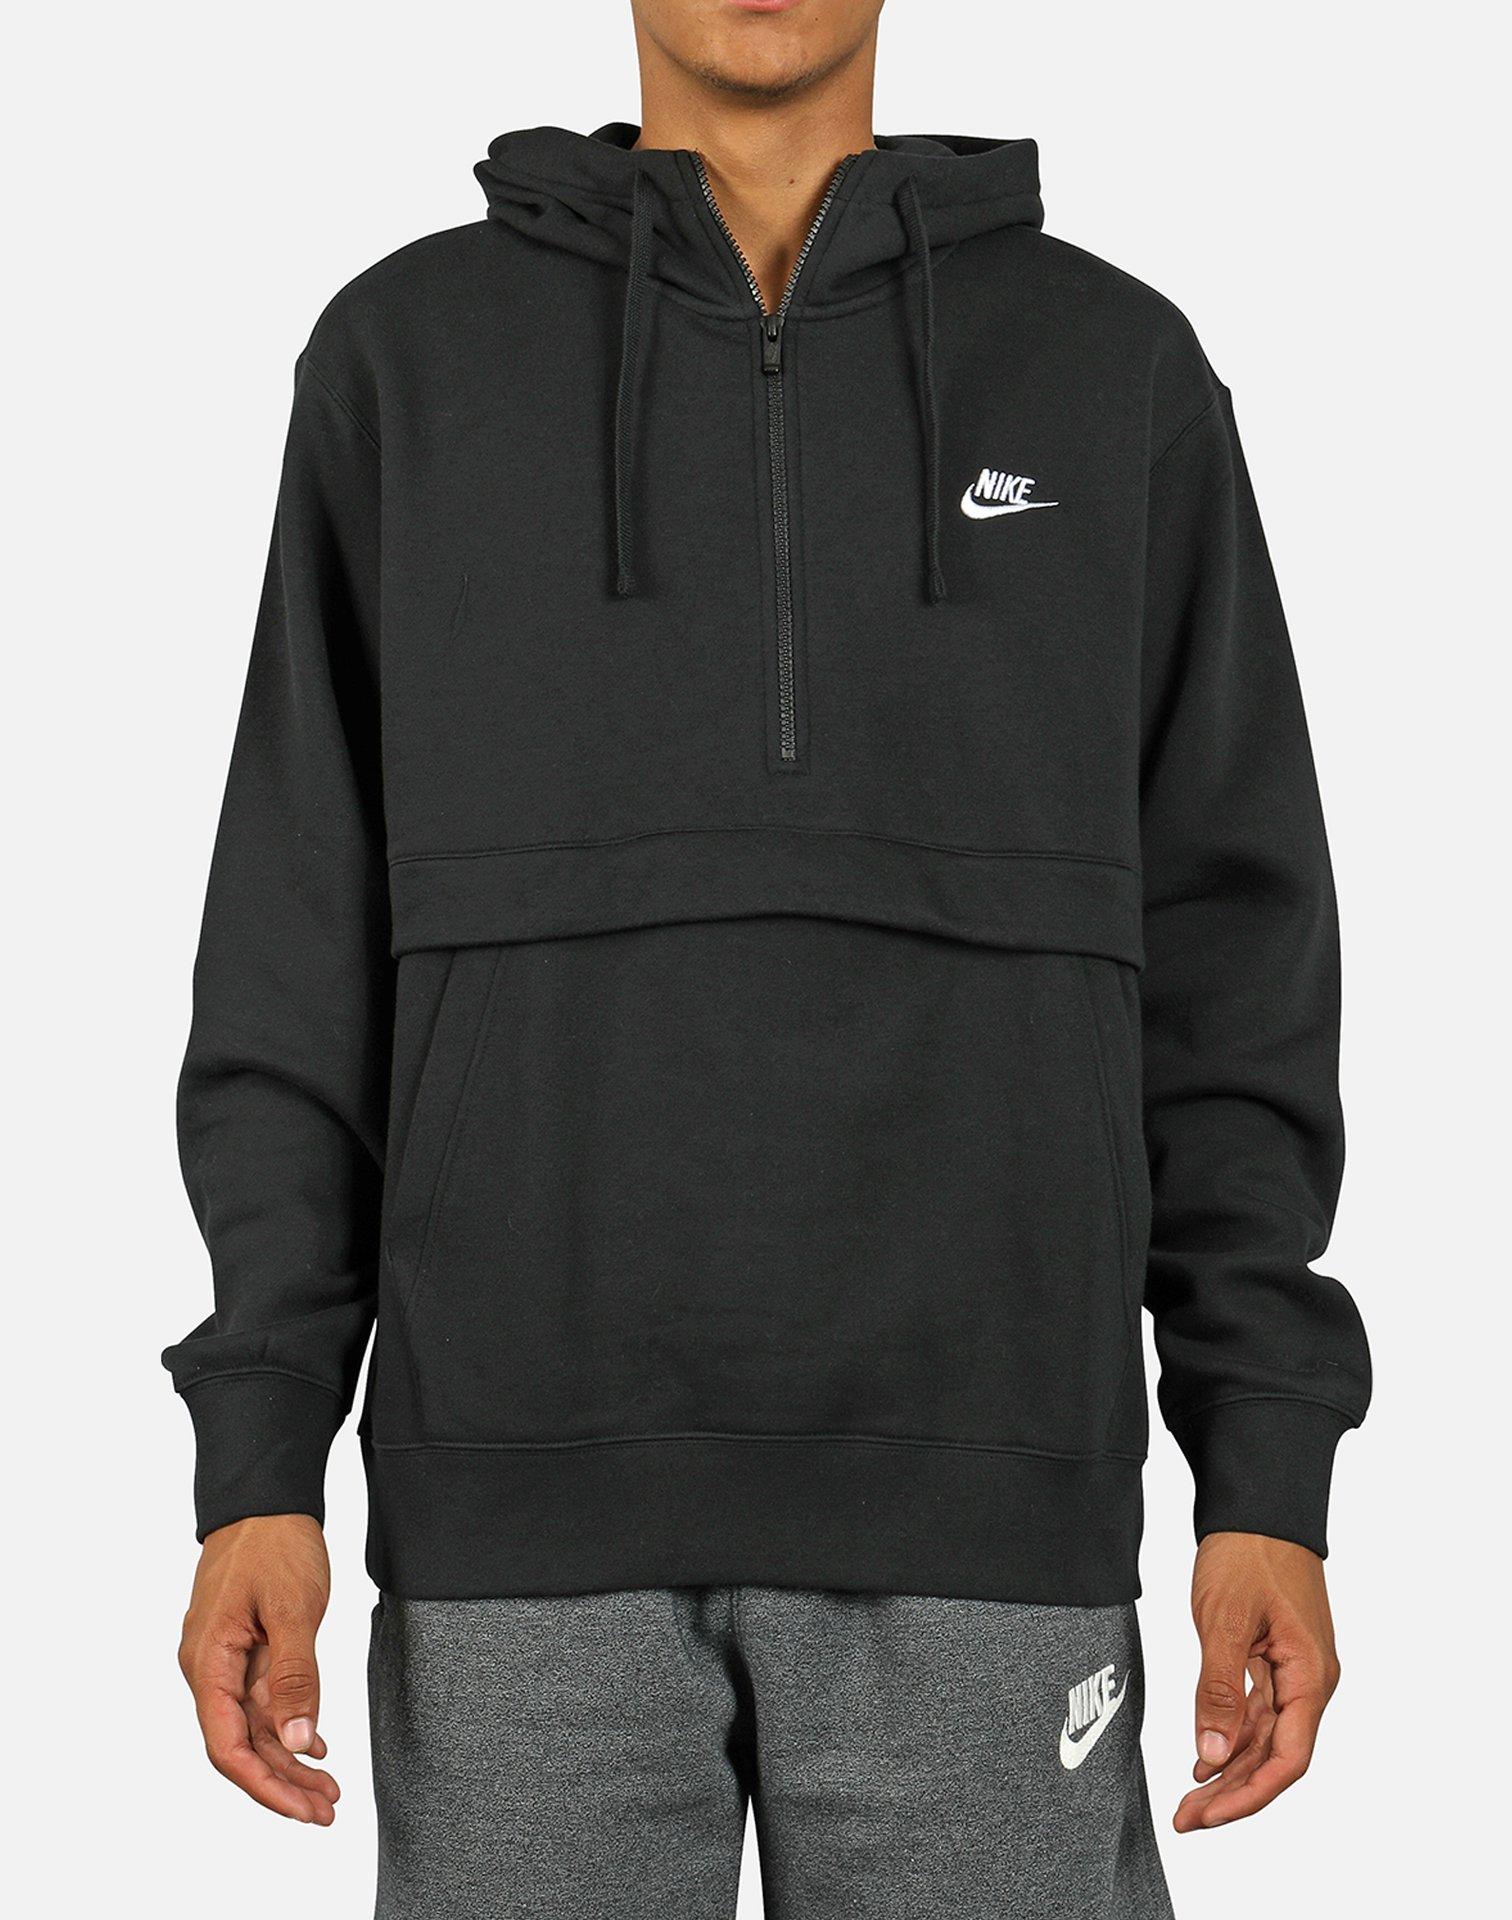 Nike Nsw Club Fleece Half-zip Hoodie in Black for Men - Lyst